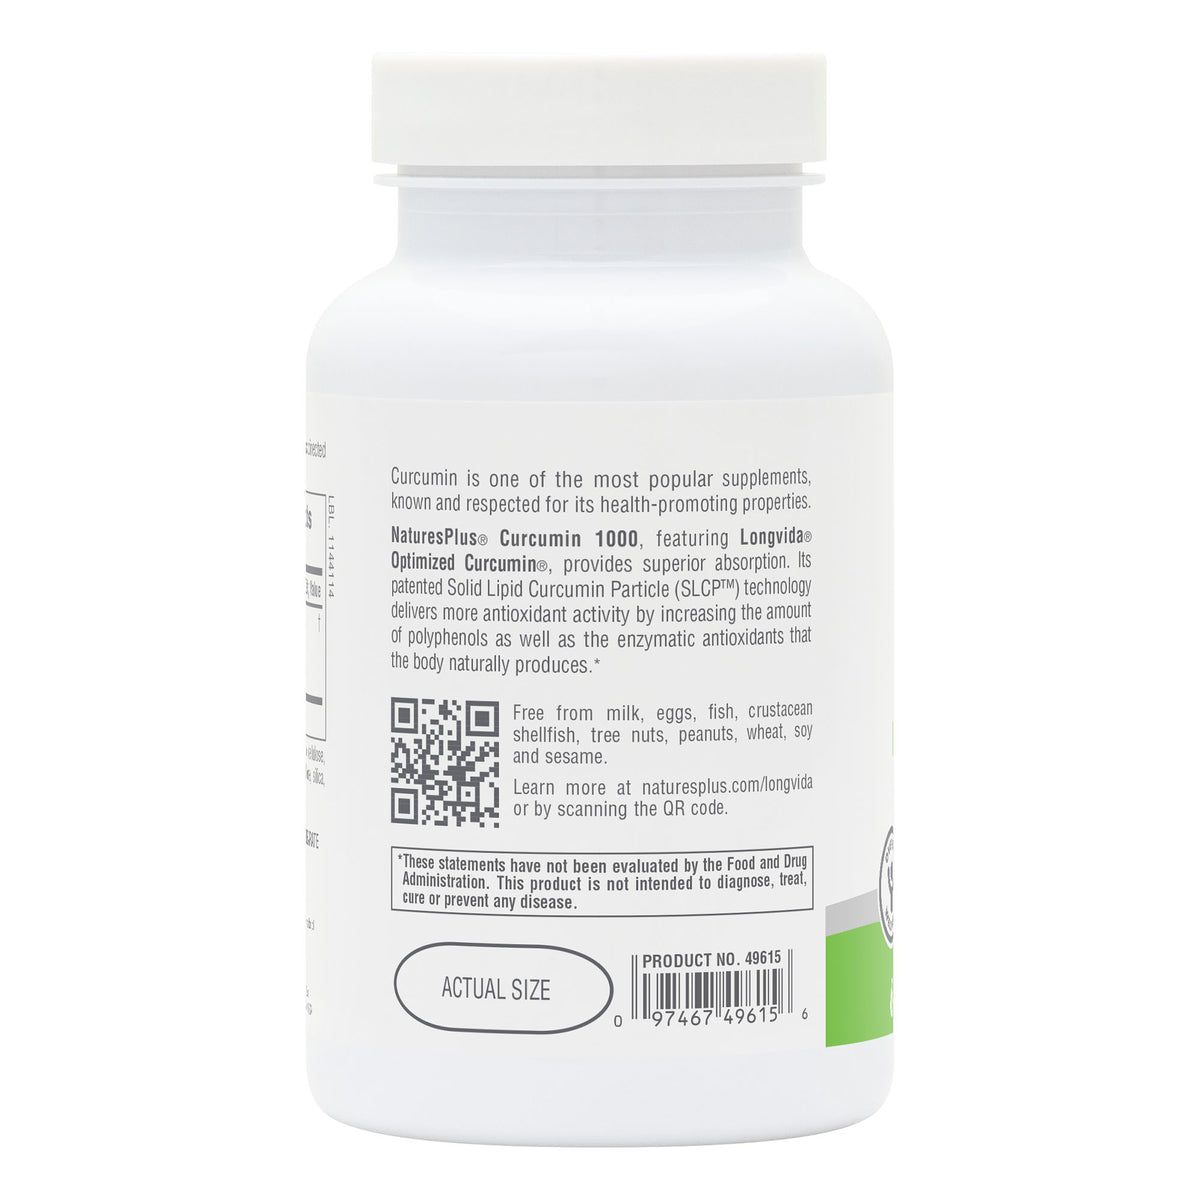 product image of NaturesPlus PRO Curcumin Longvida® 1000 MG Tablets containing 60 Count